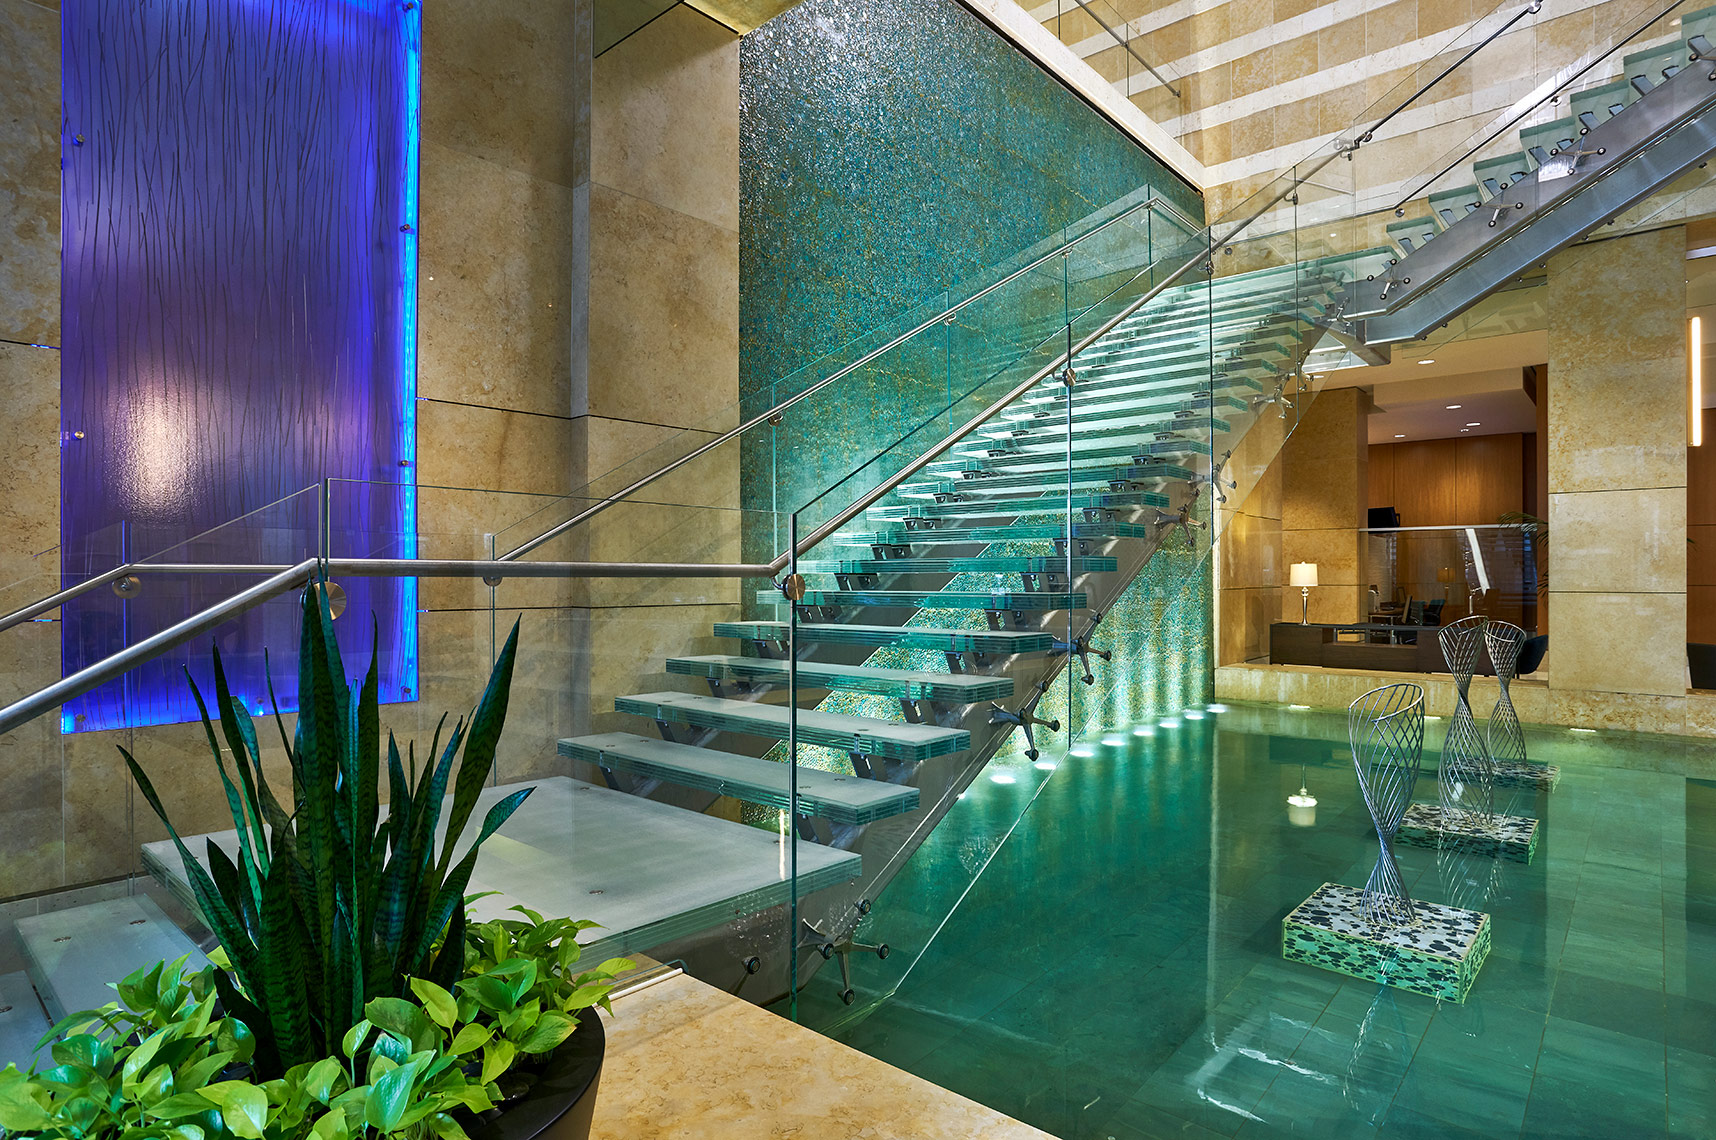 Westin Virginia Beach Hotel - Lobby Stair